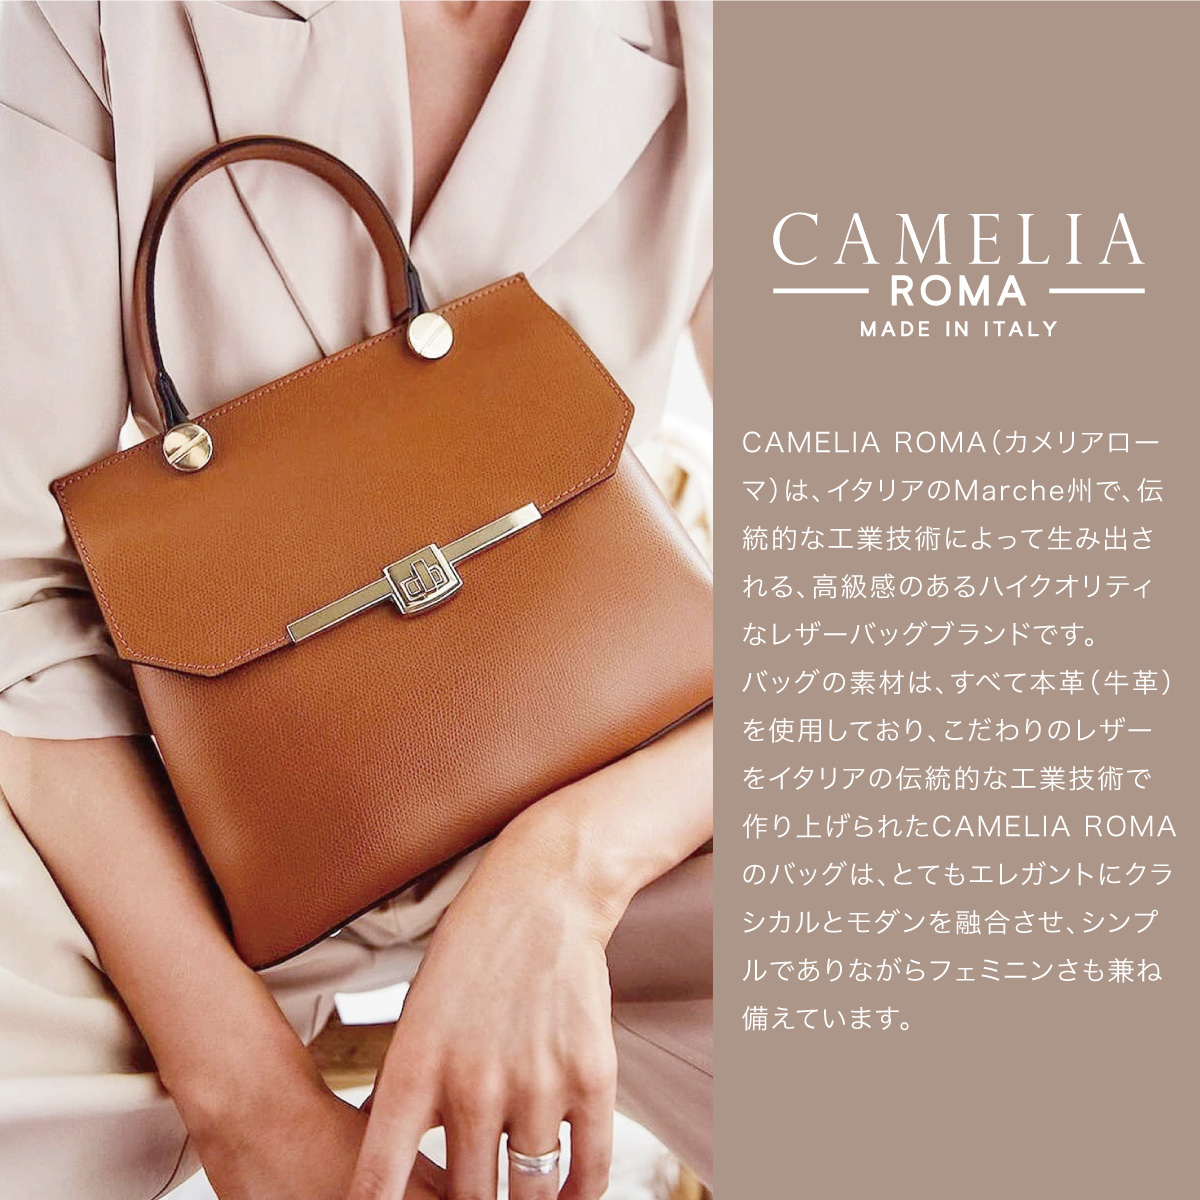 CAMELIA ROMA カメリアローマ 2way レザー ハンドバッグ 7色 鞄 かばん レディース バック ショルダーバッグ イタリア プレゼント  ギフト シンプル :borsamano-0026:WILLS 通販 